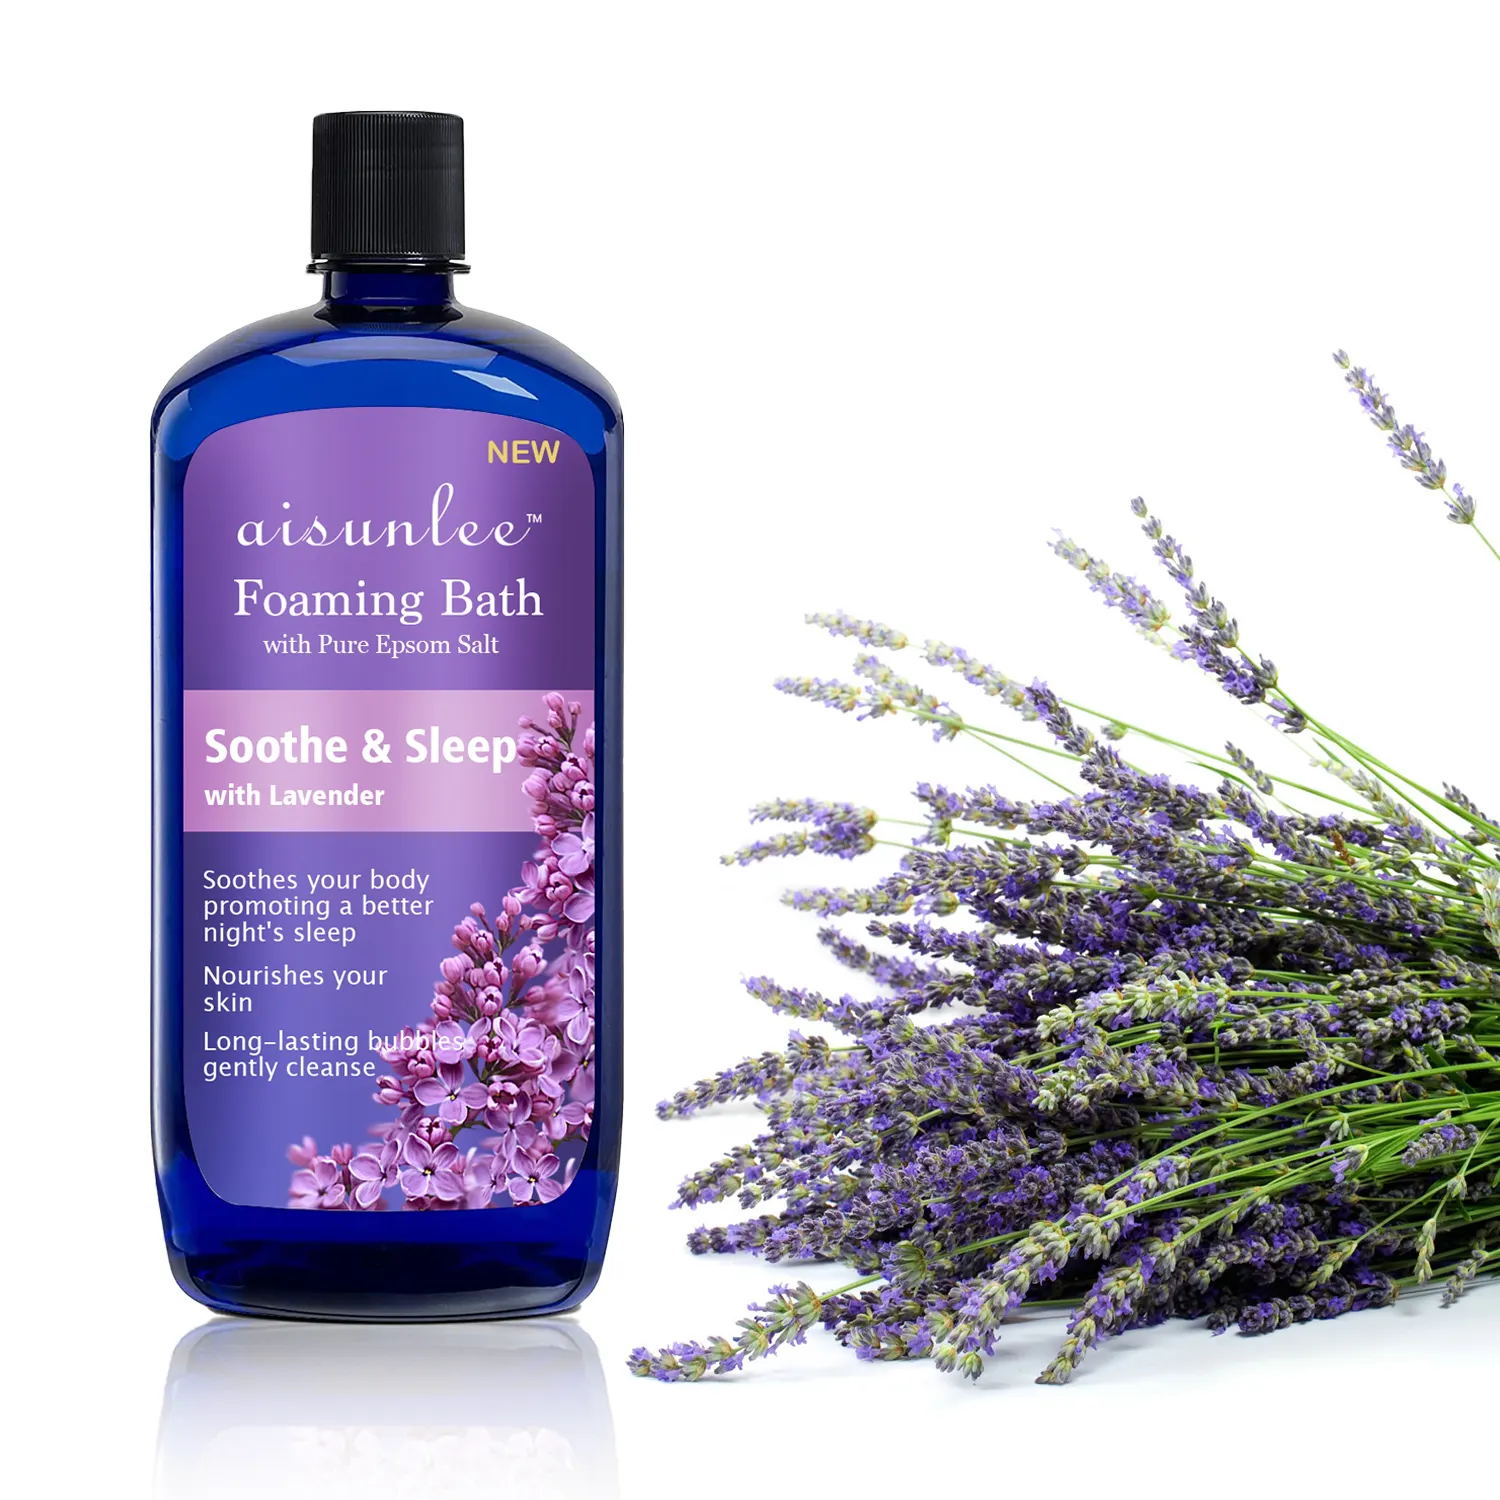 Wholesale Natural Organic Soothe & Sleep with Lavender foaming bath Pure Epsom Salt private label Spa liquid bubble bath